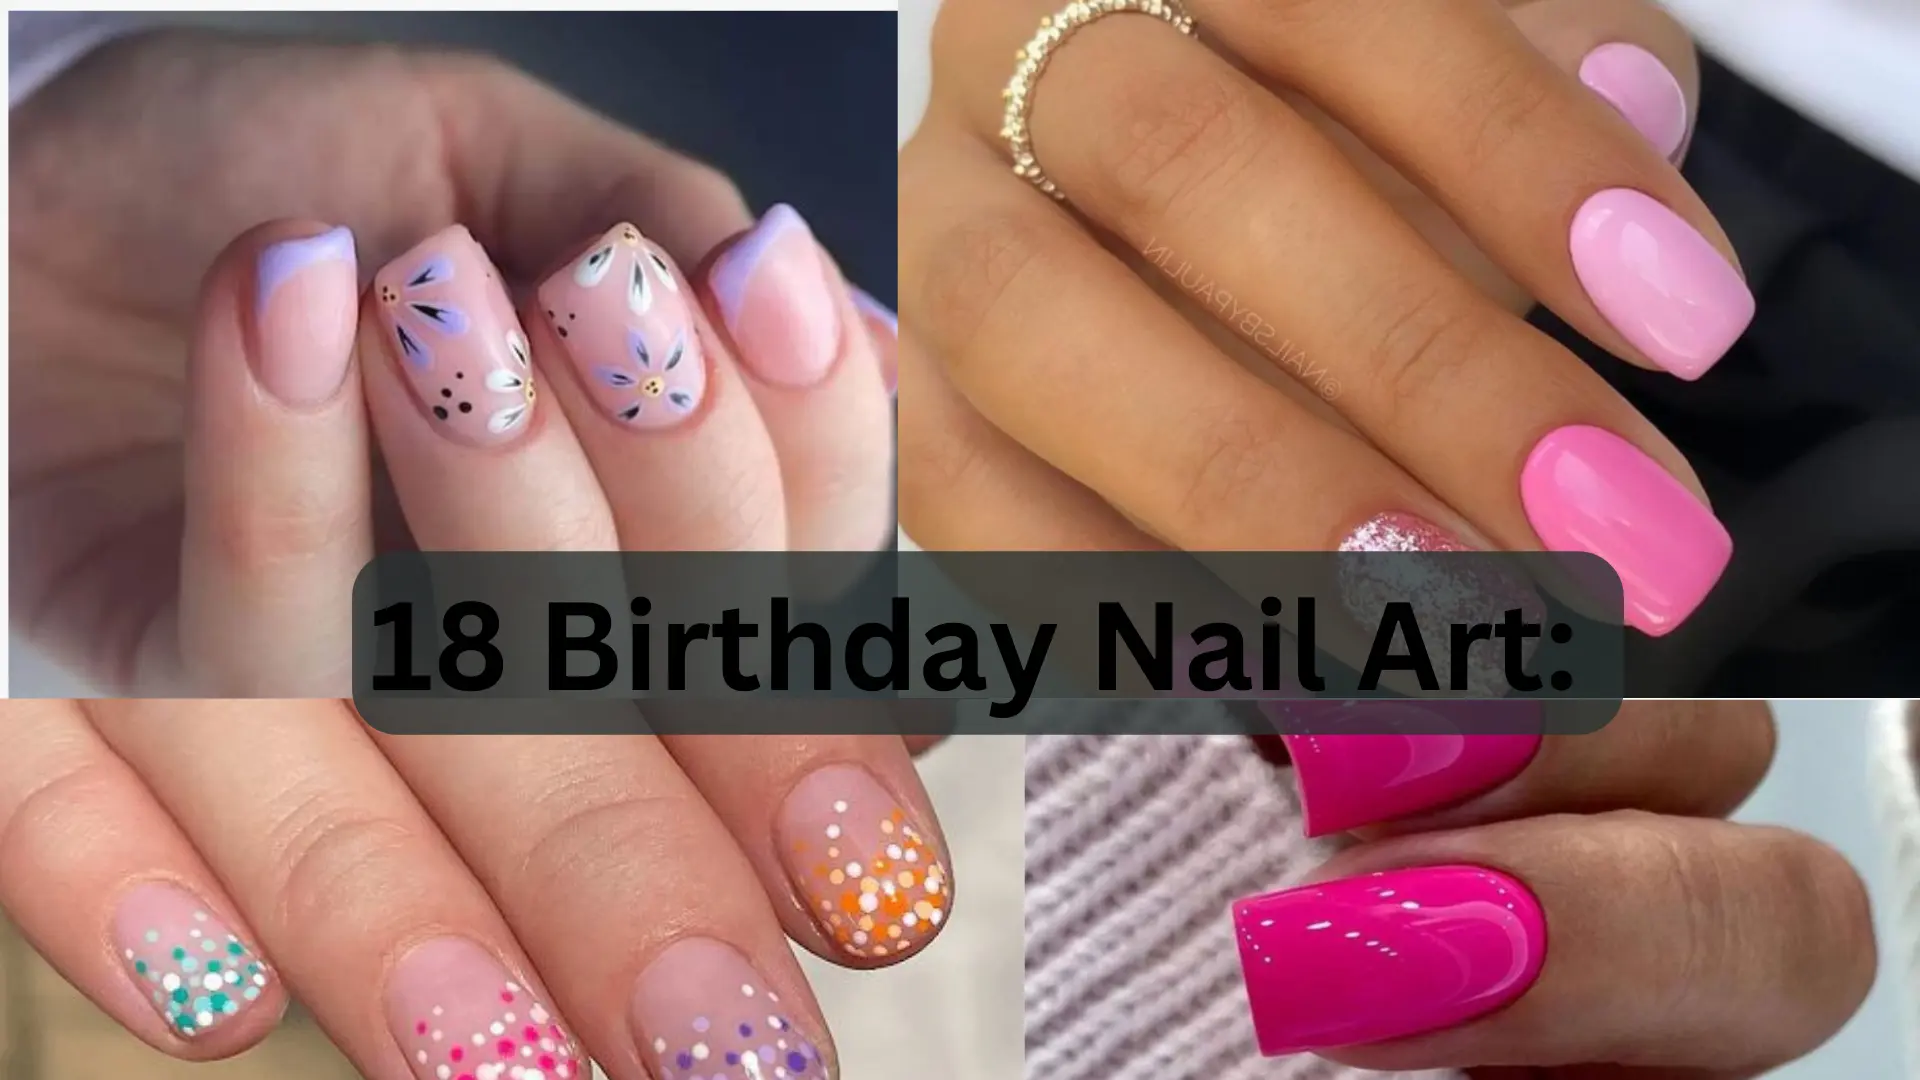 ehmkay nails: Birthday Nails to Celebrate My Dad!